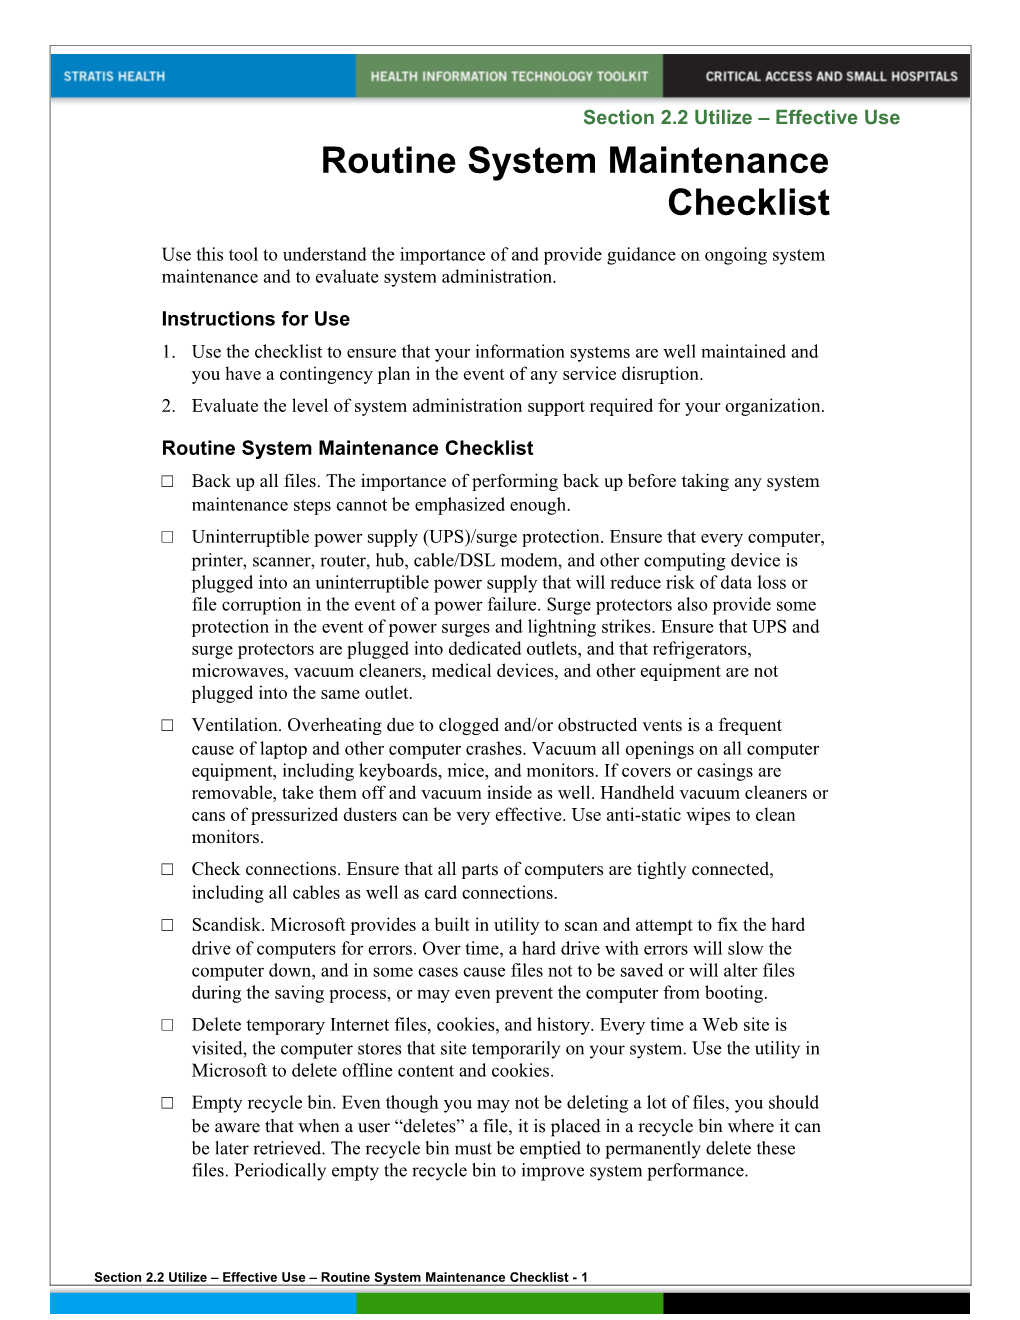 Section 2.2 Utilize Effective Use Routine System Maintenance Checklist - 1